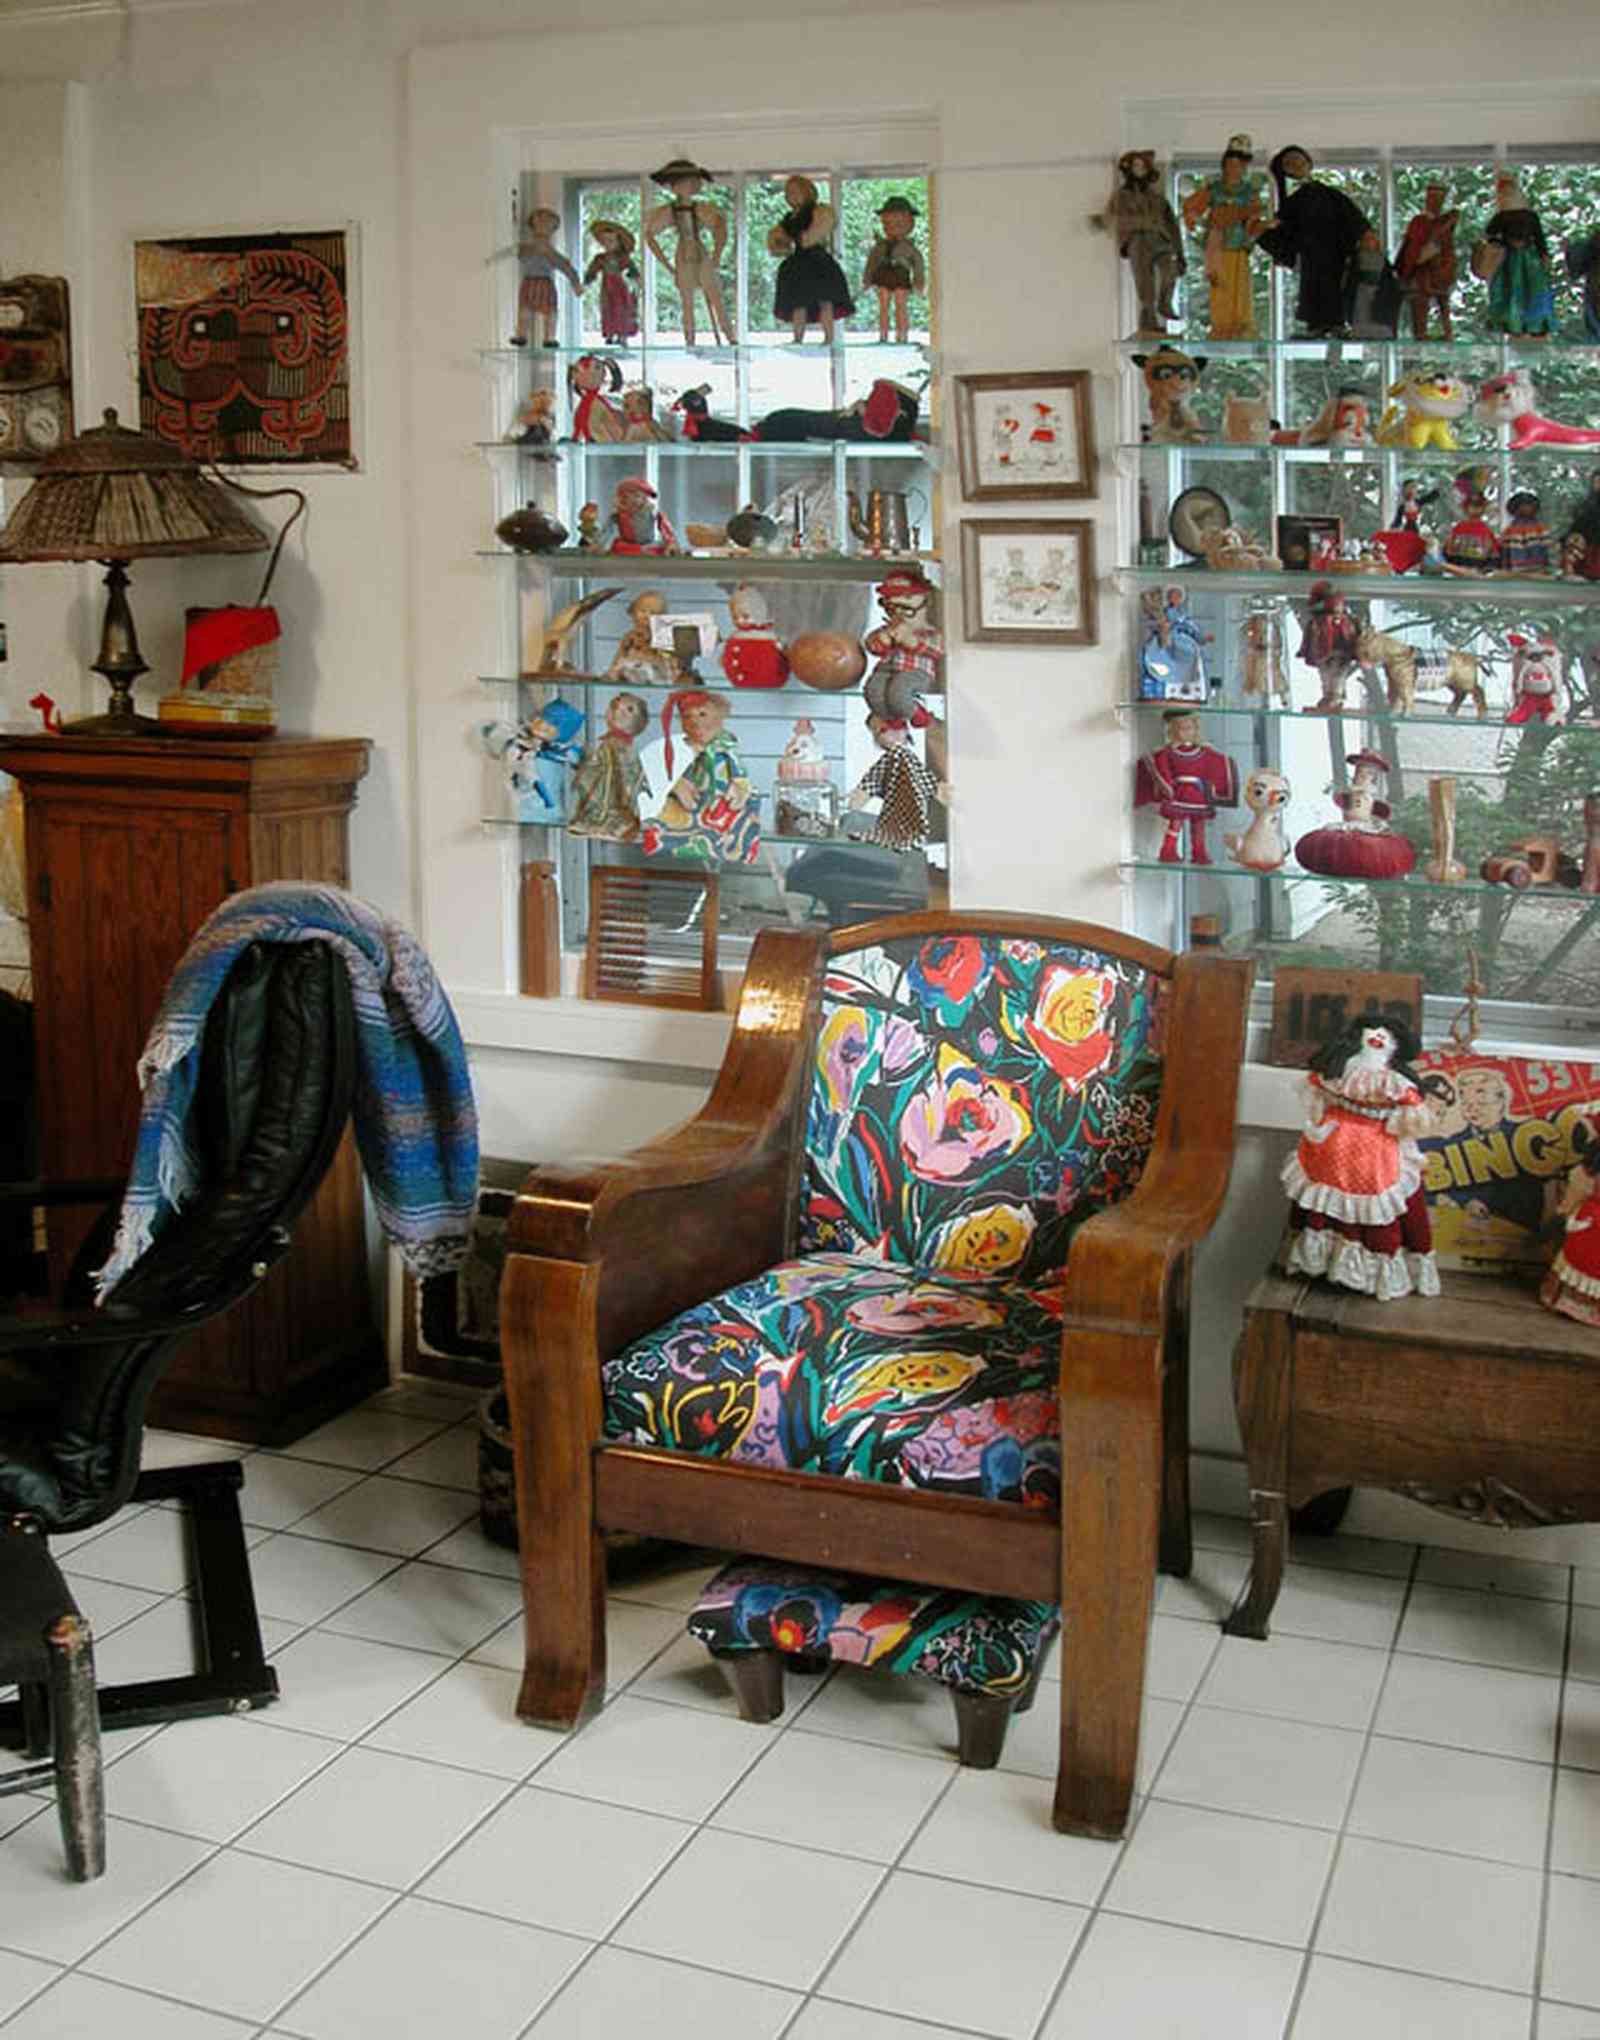 East-Pensacola-Heights:-600-Bayou-Blvd_18.jpg:  antique dolls, antique toys, ceramic tile floors, family room